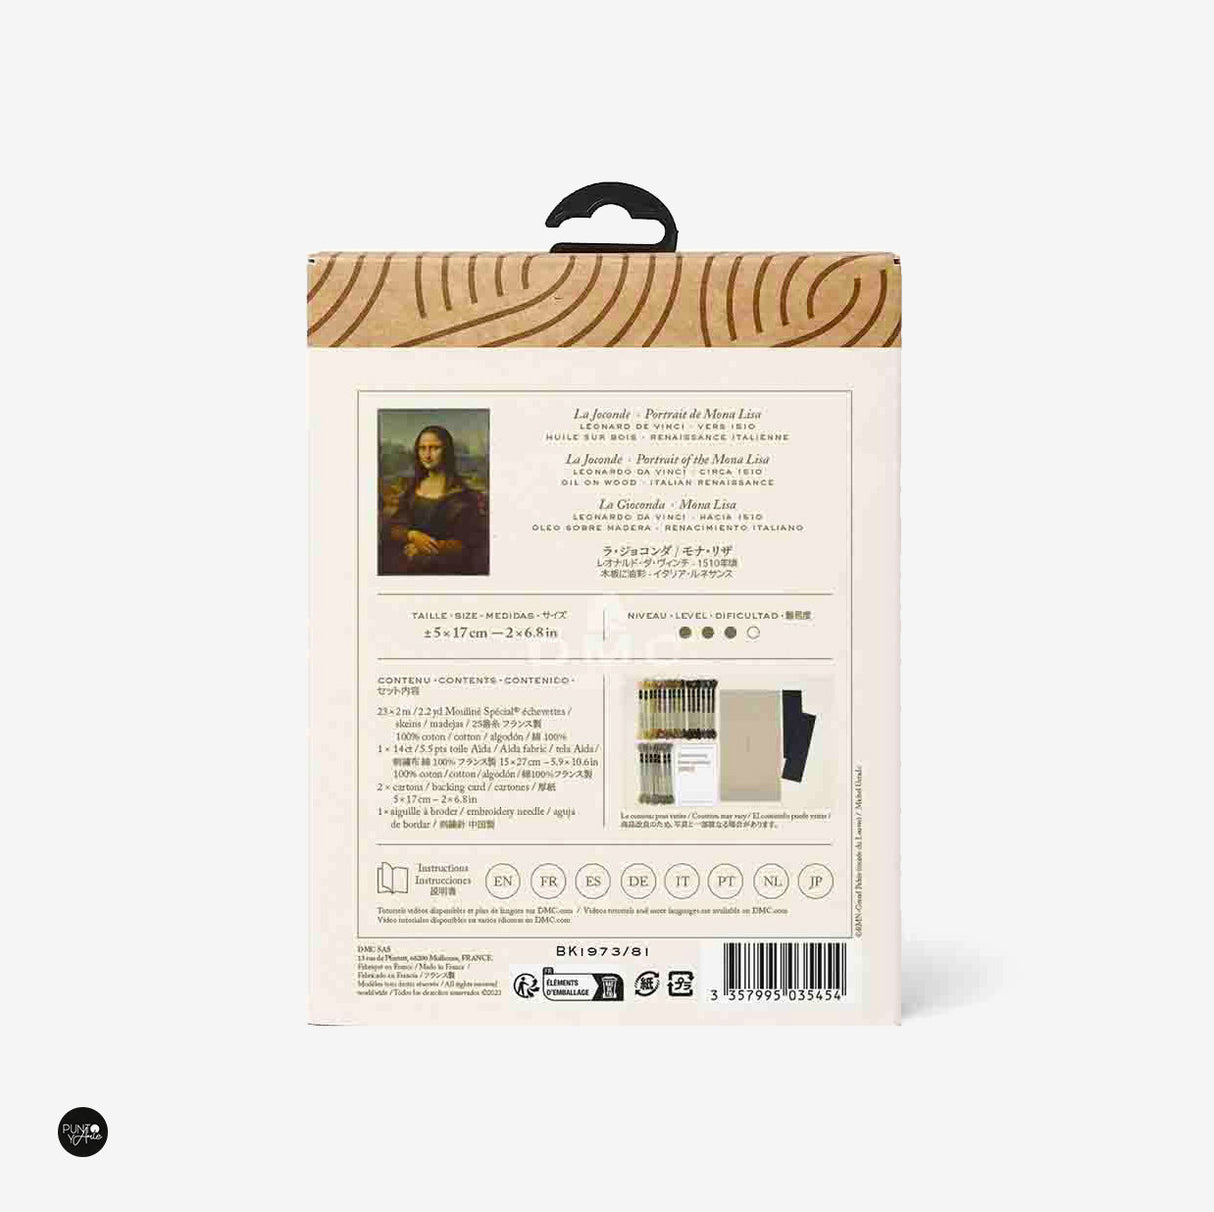 Cross stitch embroidery kit "Mona Lisa" - DMC, to create a unique bookmark